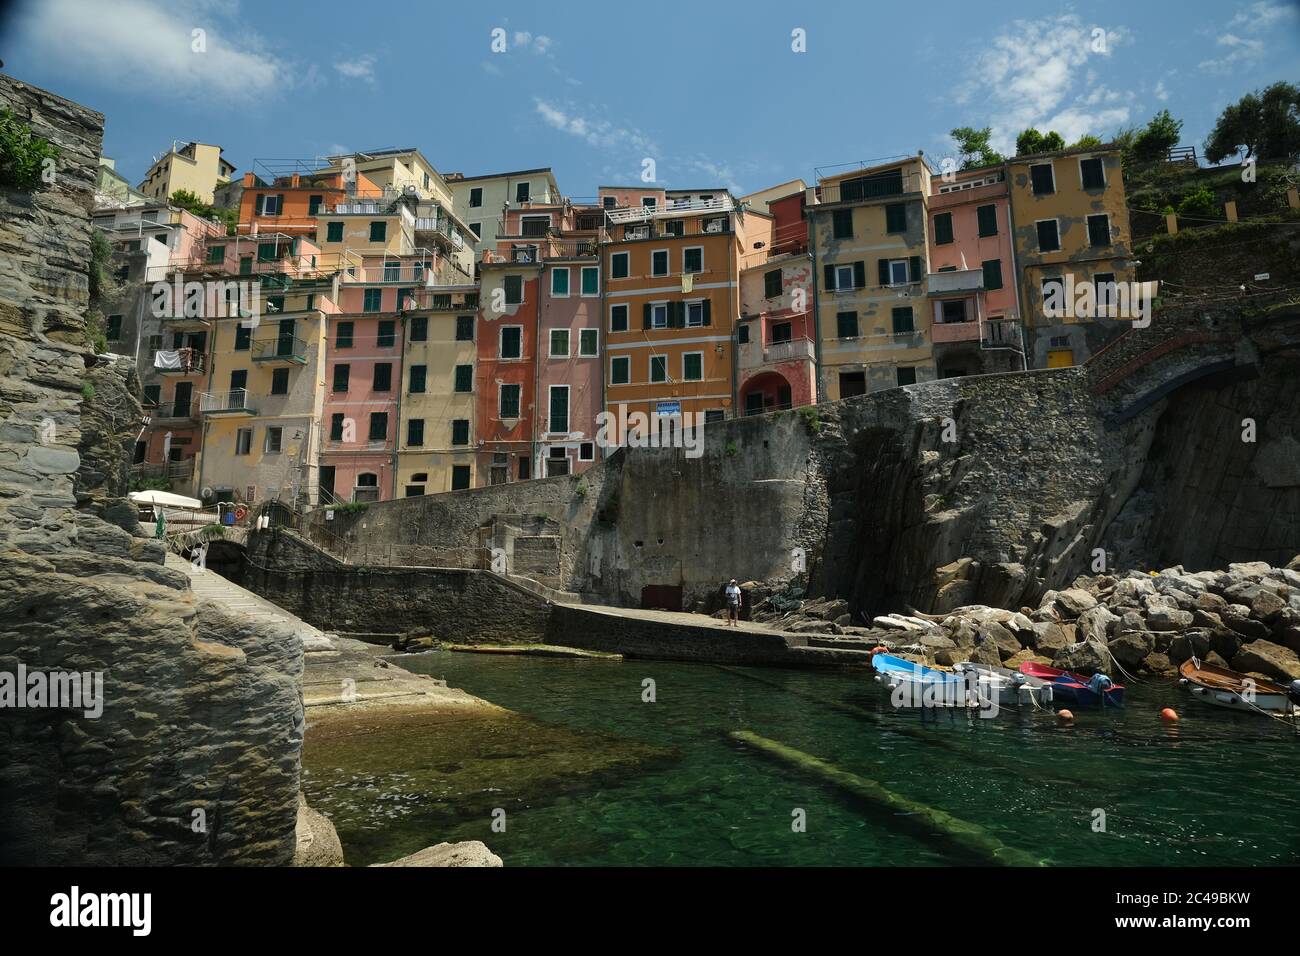 Riomaggiore, Cinque Terre, Ligurien. Ca. 2020. Farbige Häuser am Meer. Berühmtes Touristenziel. Coronavirus-Periode. Lizenzfreies Archivfoto Stockfoto